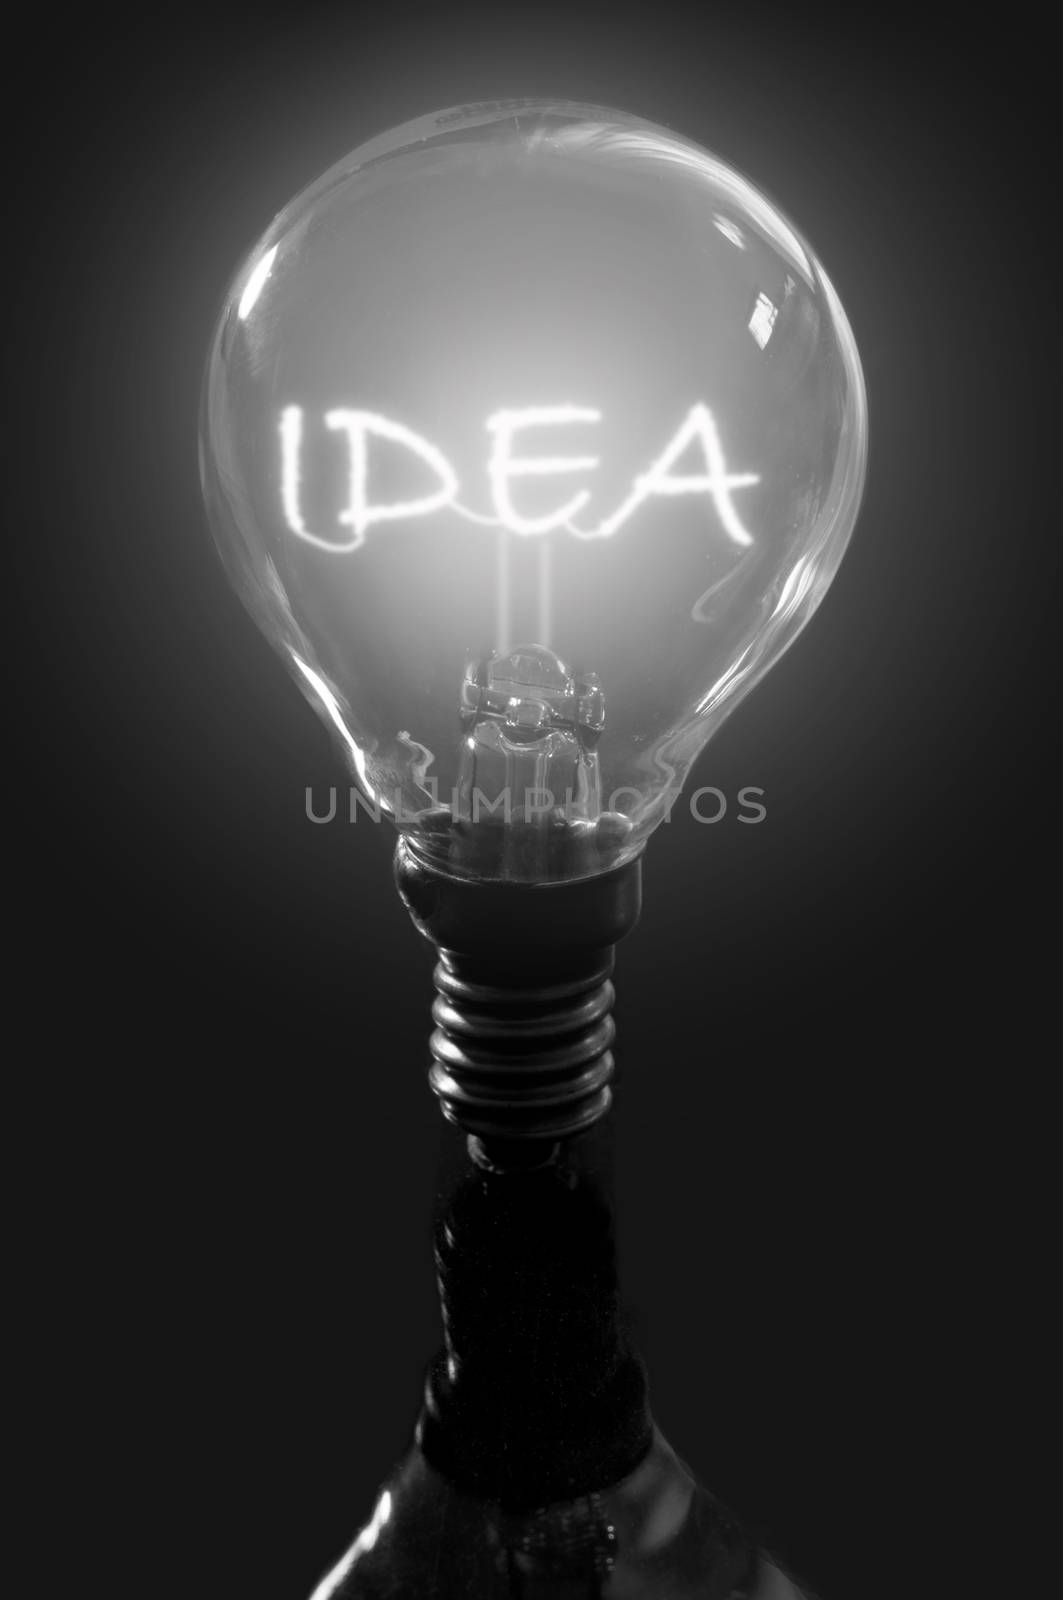 Illuminated idea sign inside a light bulb